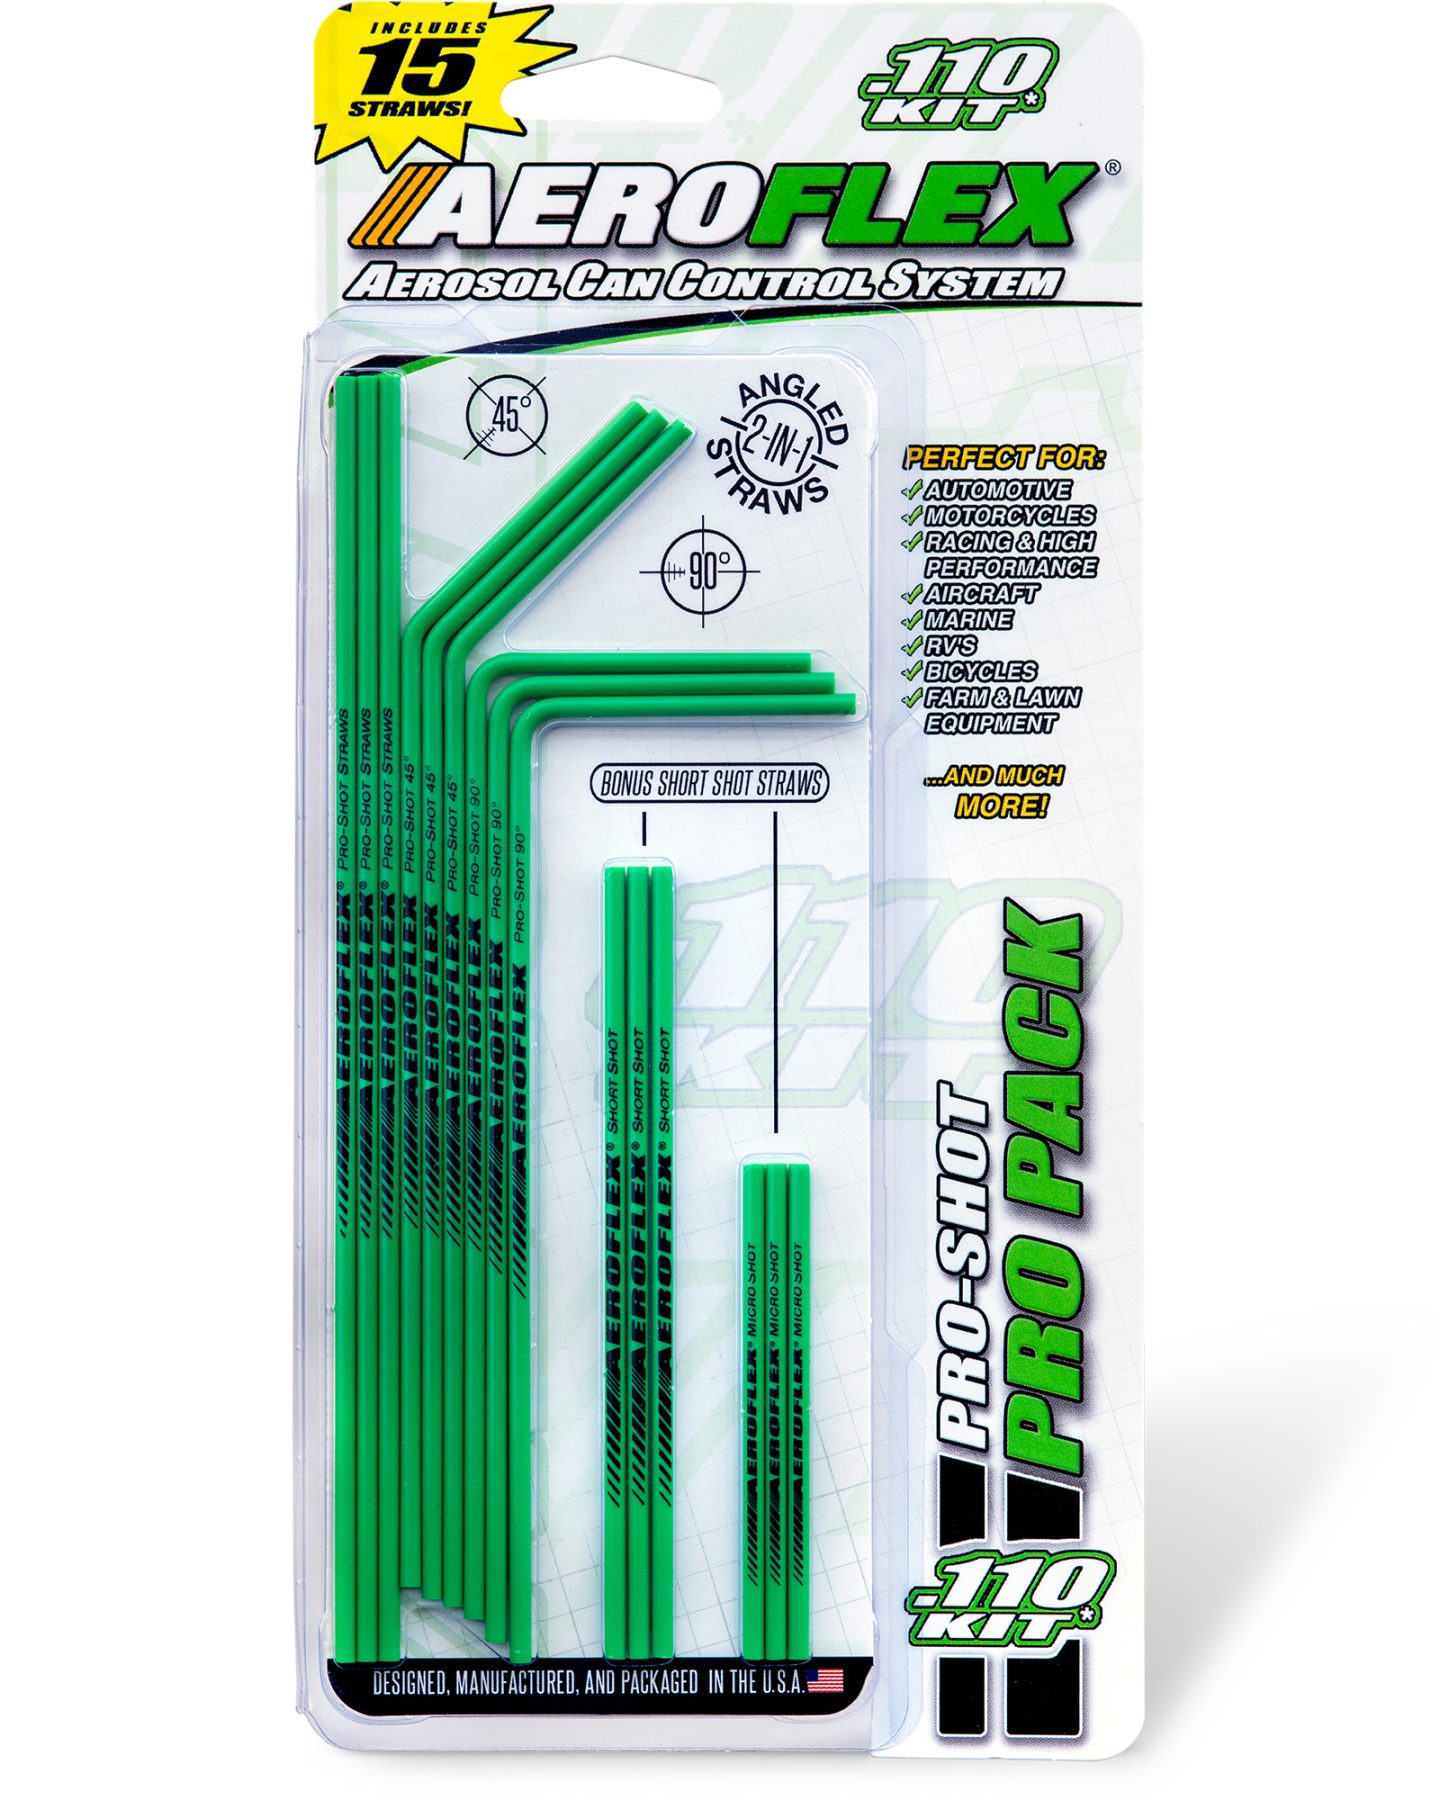 https://aeroflex.net/wp-content/uploads/2020/05/aeroflex-Green_Proshot_110-aerosol-straw-kit-2000.jpg